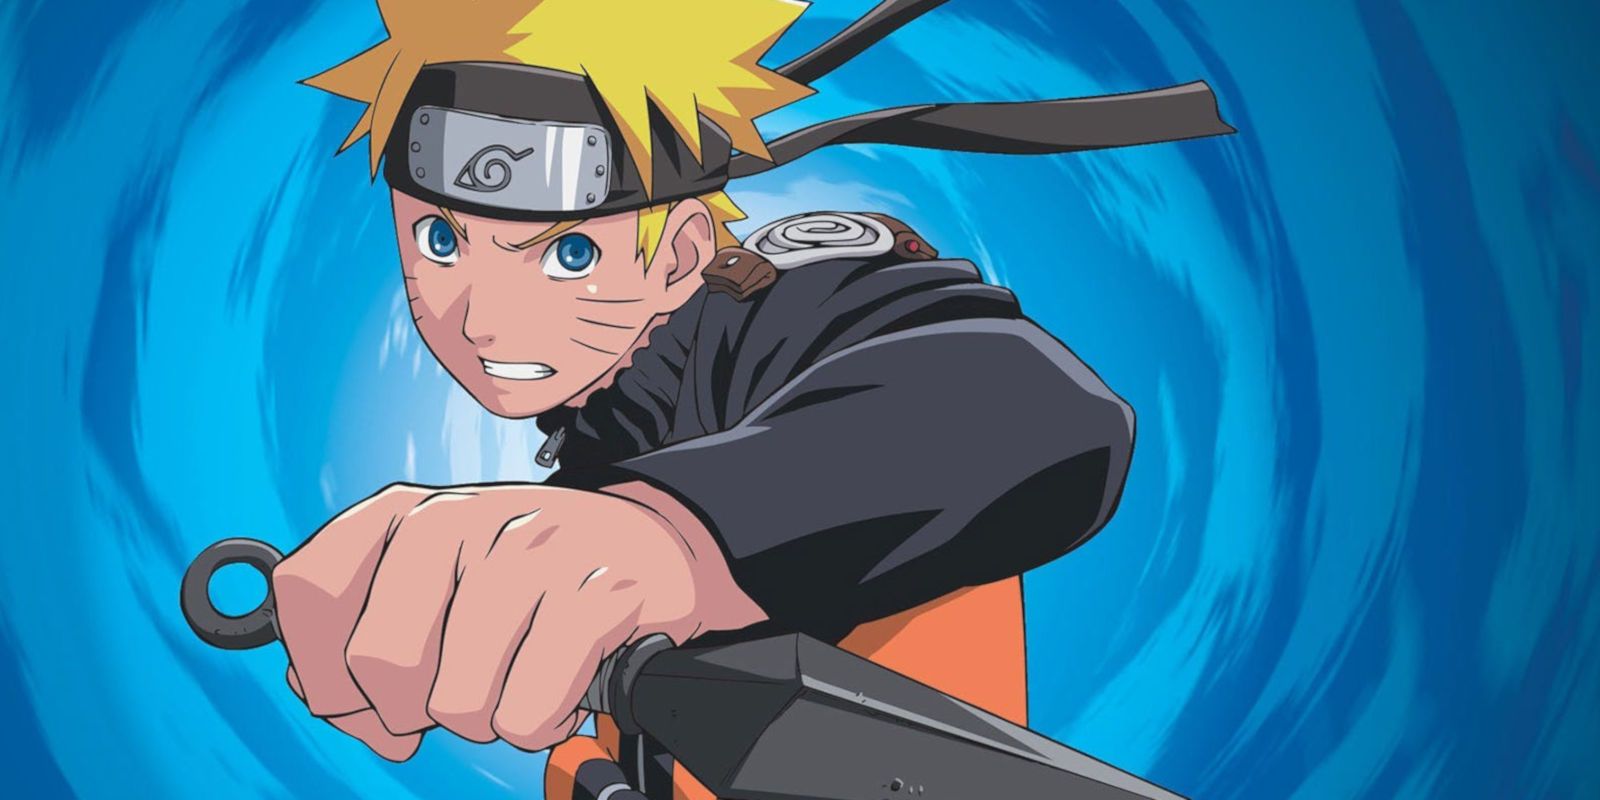 Naruto Uzumaki Brandishing a Kunai knife against a blue background